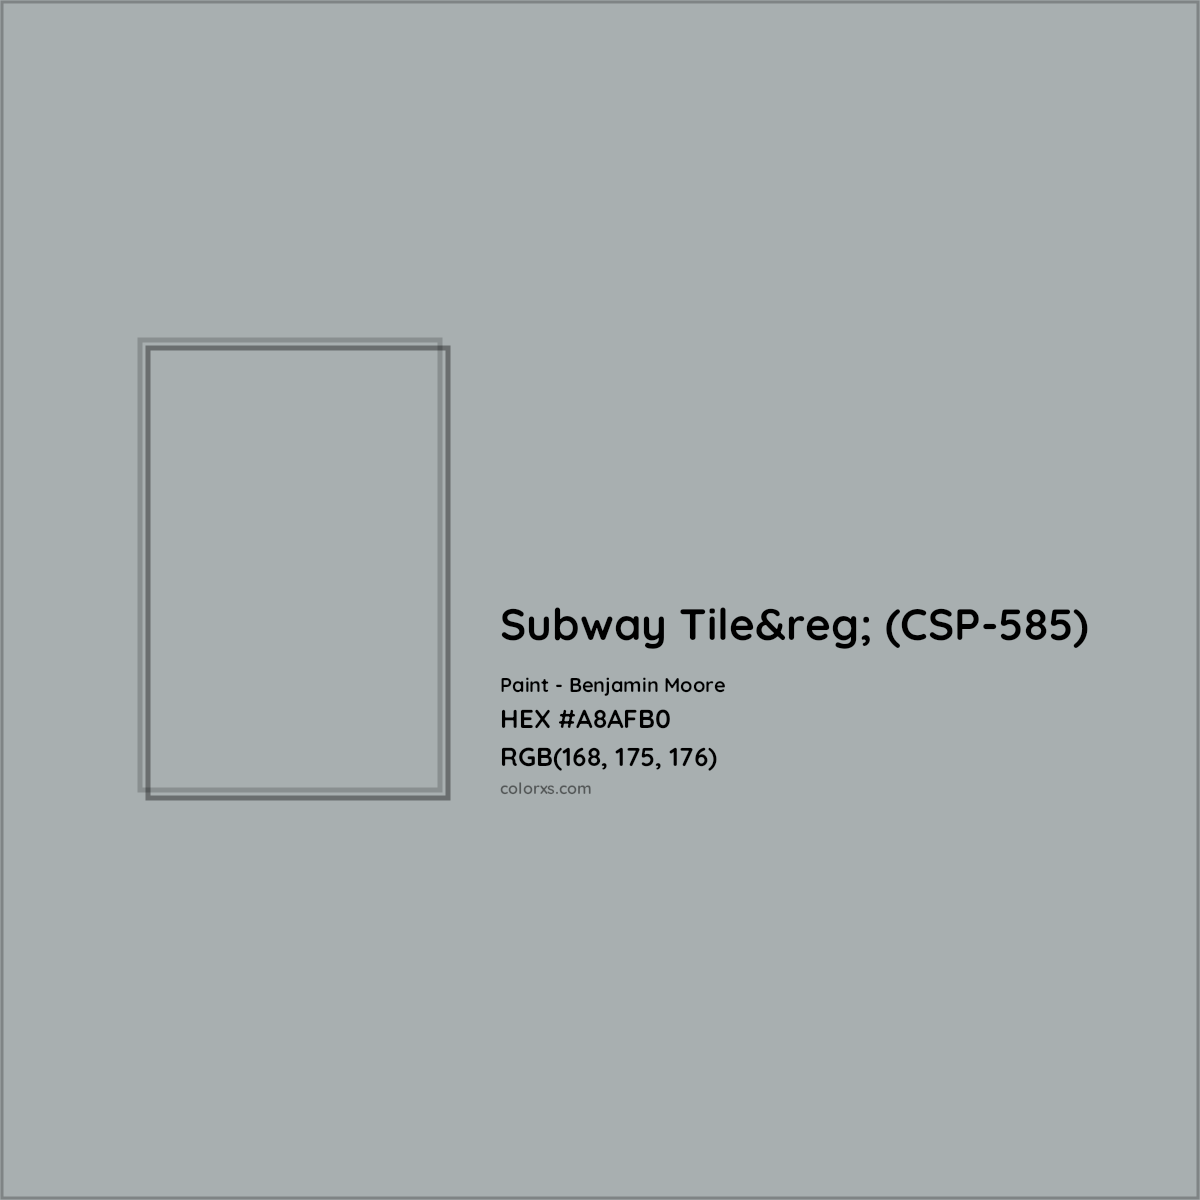 HEX #A8AFB0 Subway Tile&reg; (CSP-585) Paint Benjamin Moore - Color Code